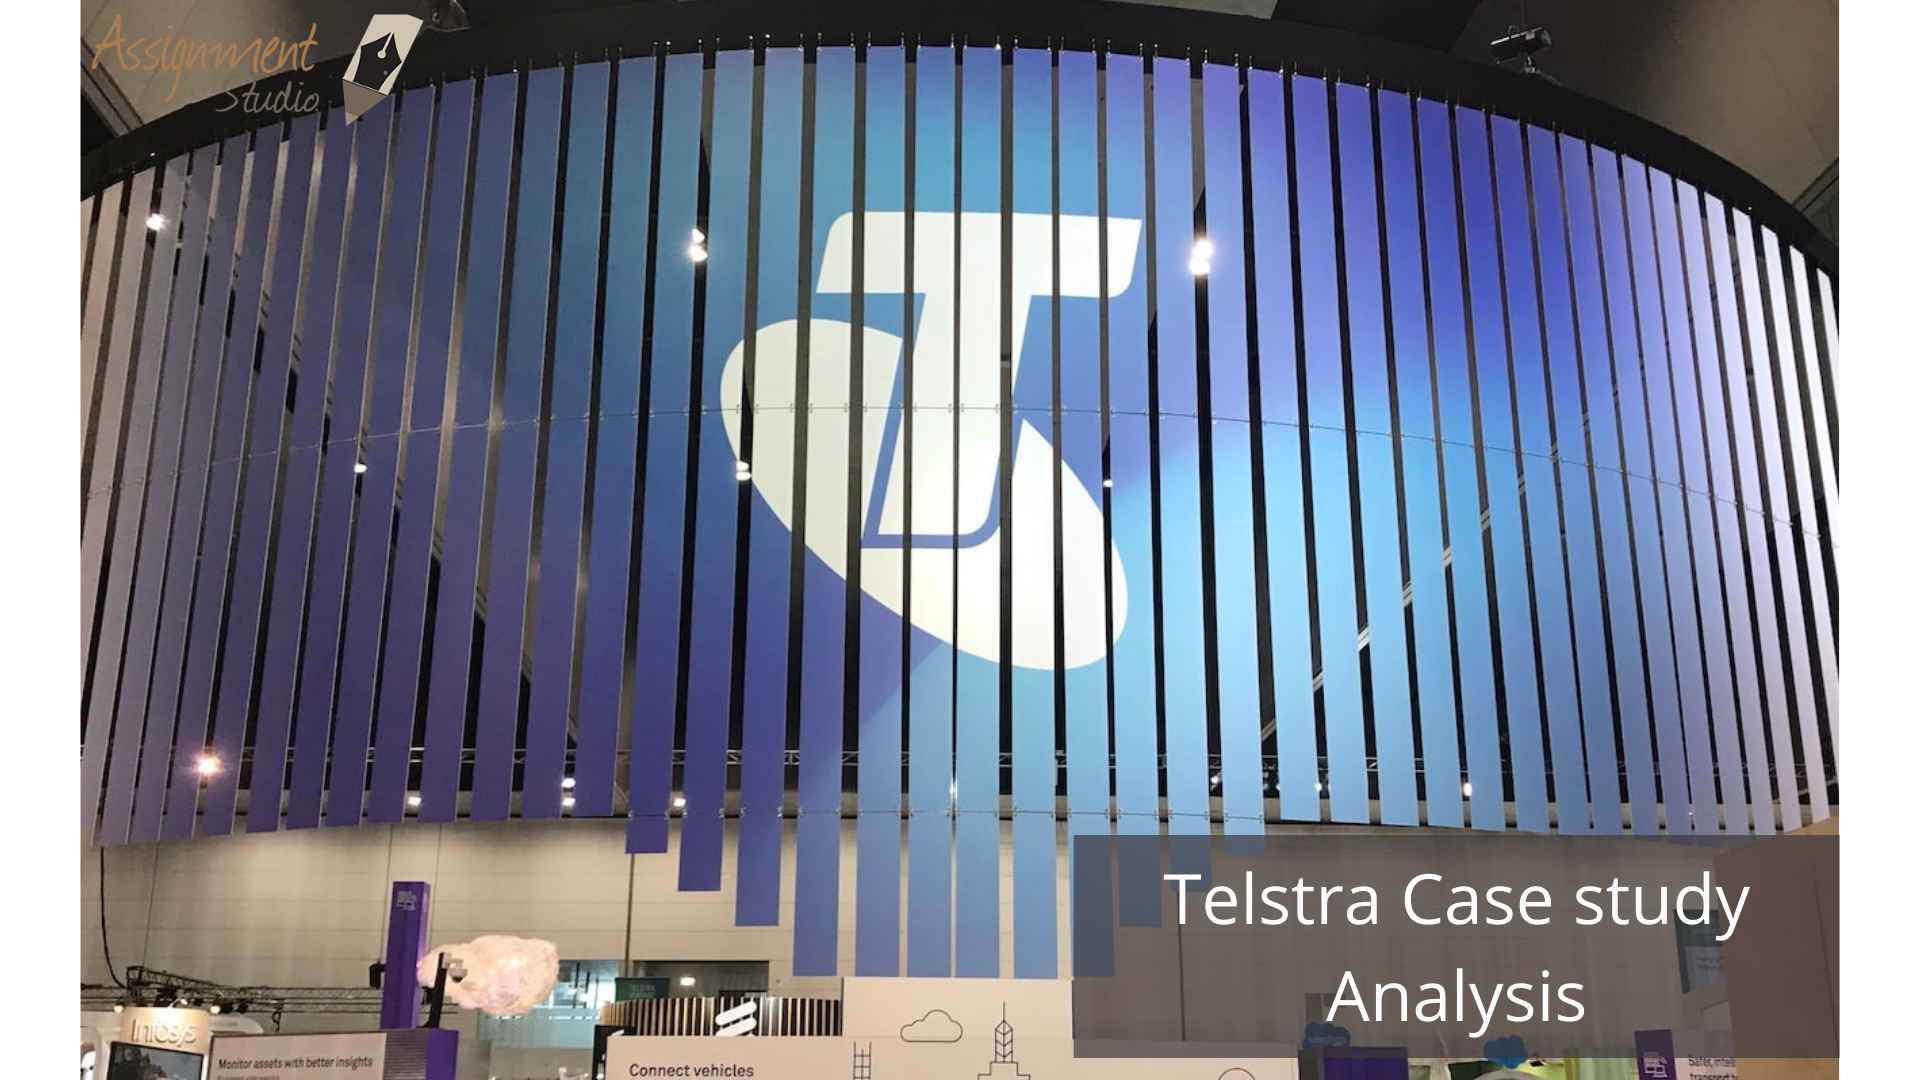 Telstra case study analysis